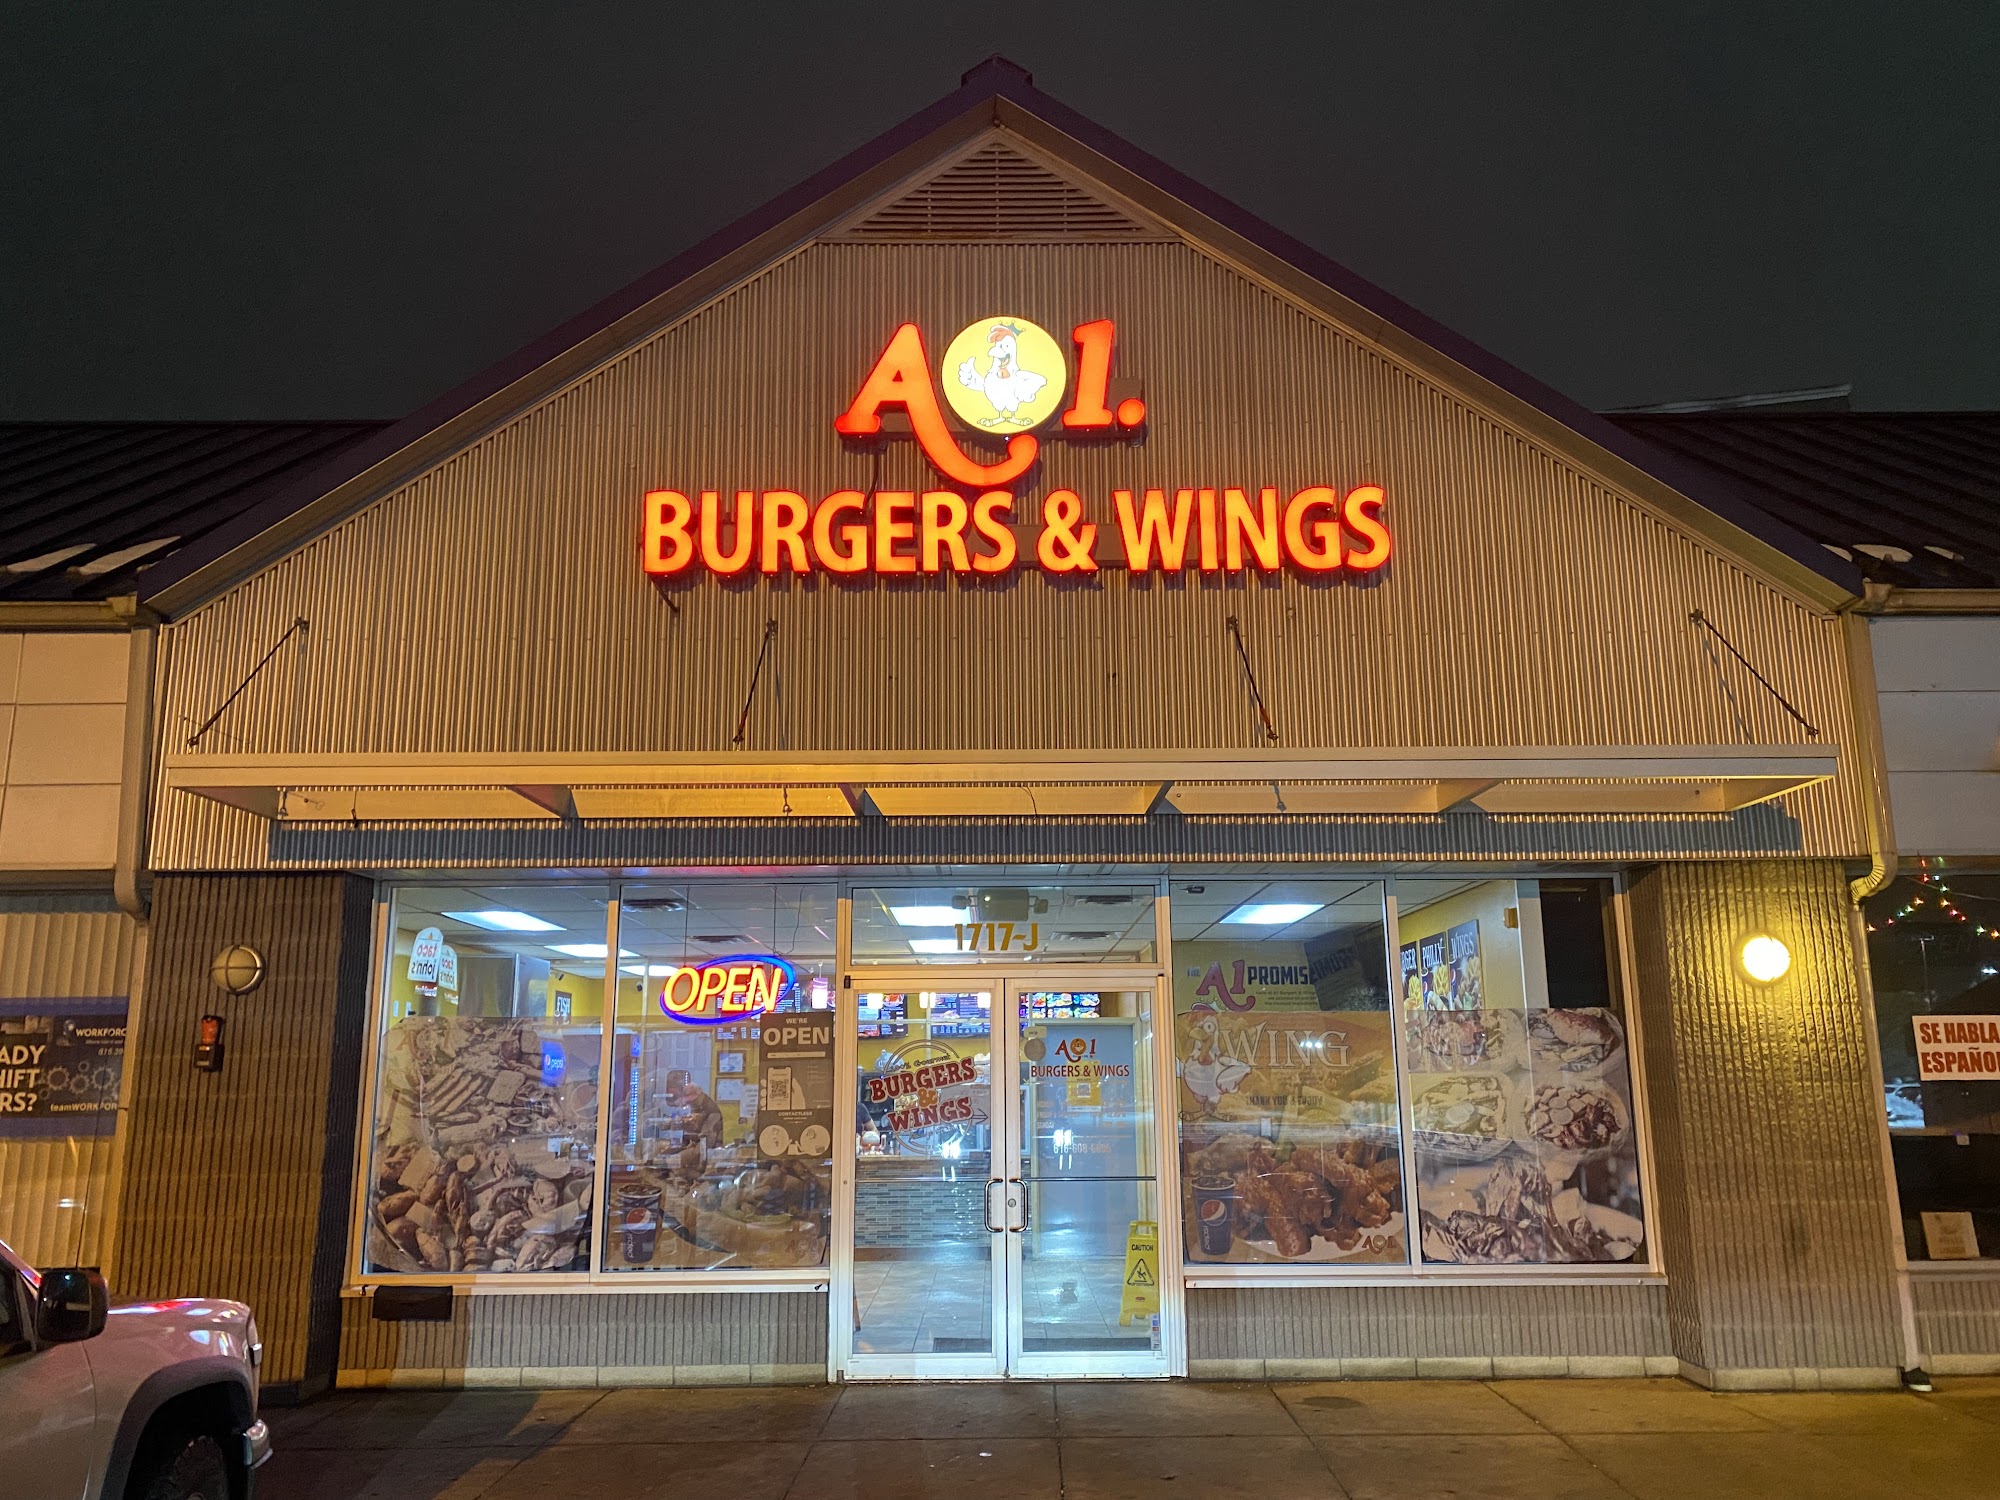 A1. Burgers & Wings